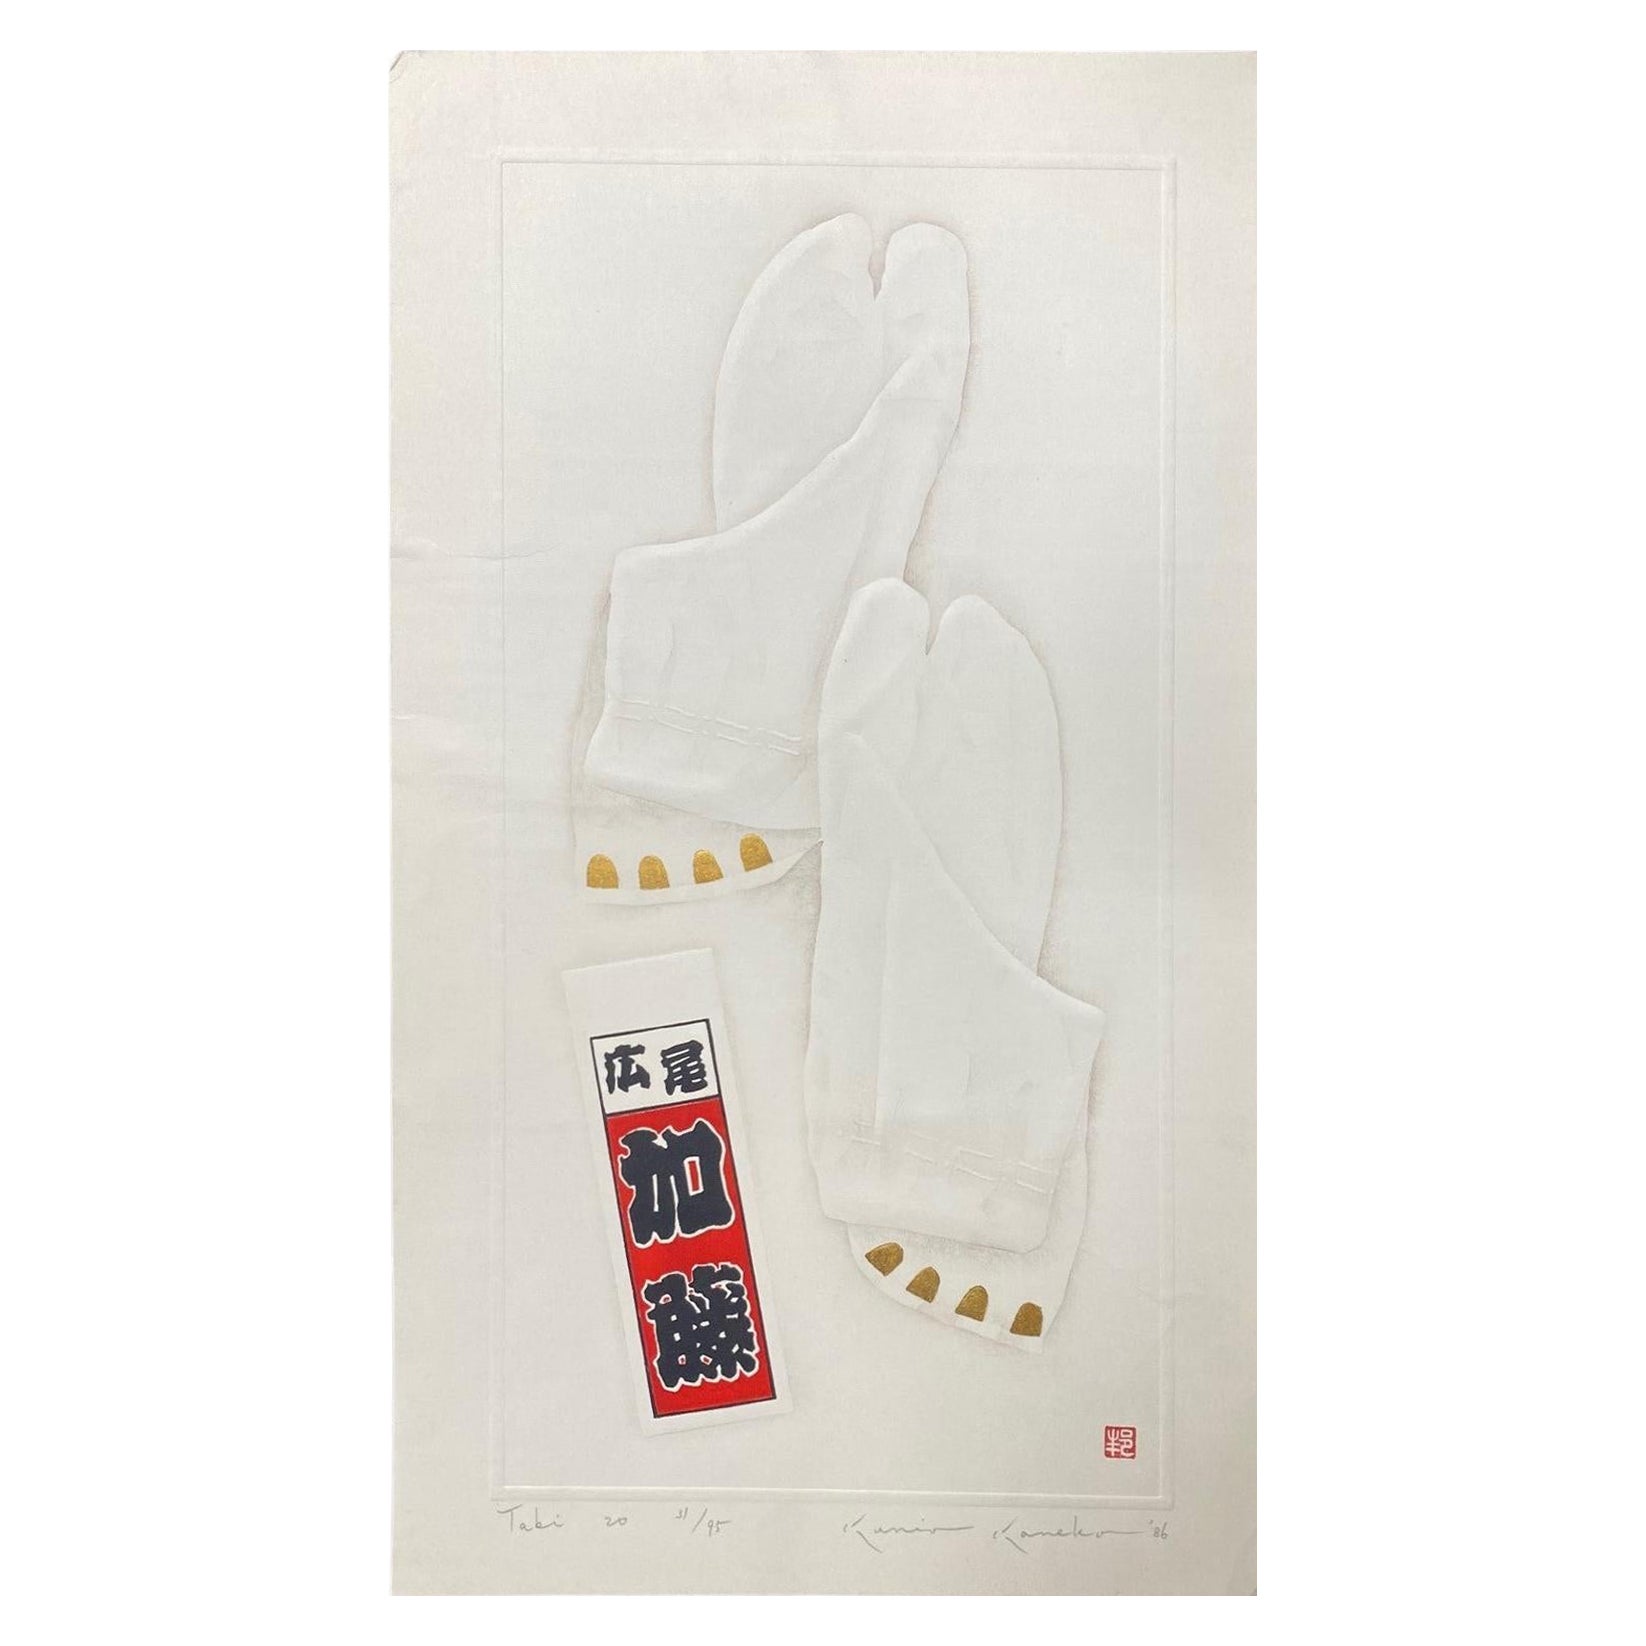 Kunio Kaneko Signed Limited Edition Japanese Woodblock Print Tabi 20, 1986 For Sale